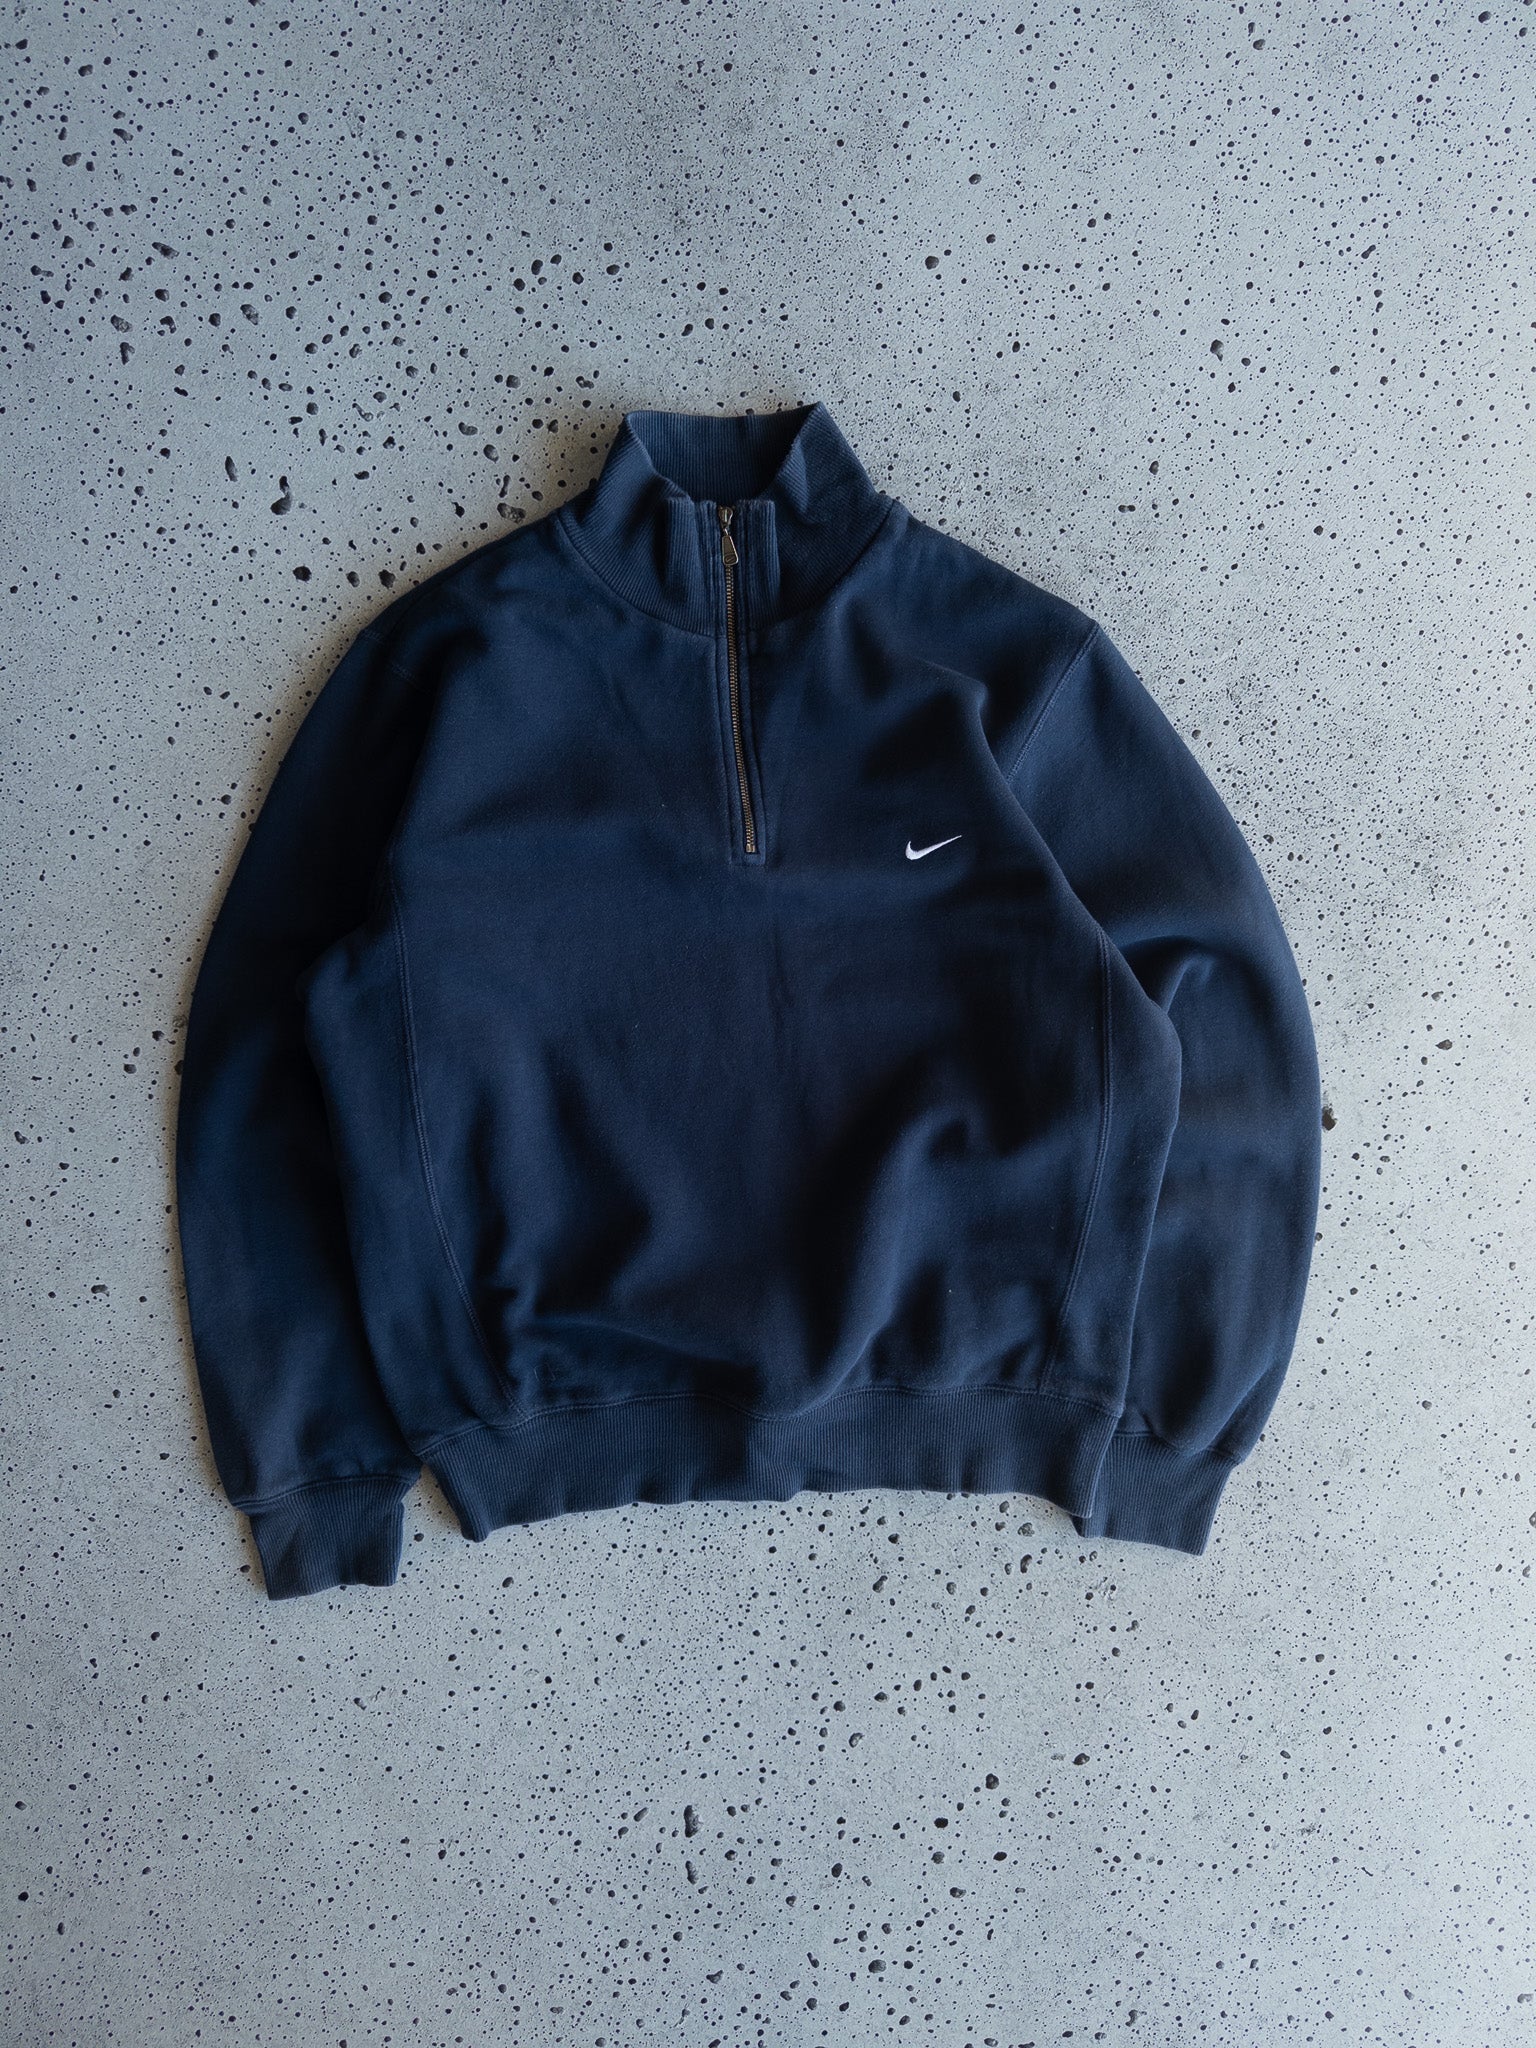 Vintage Nike Quarter Zip Sweatshirt (M)